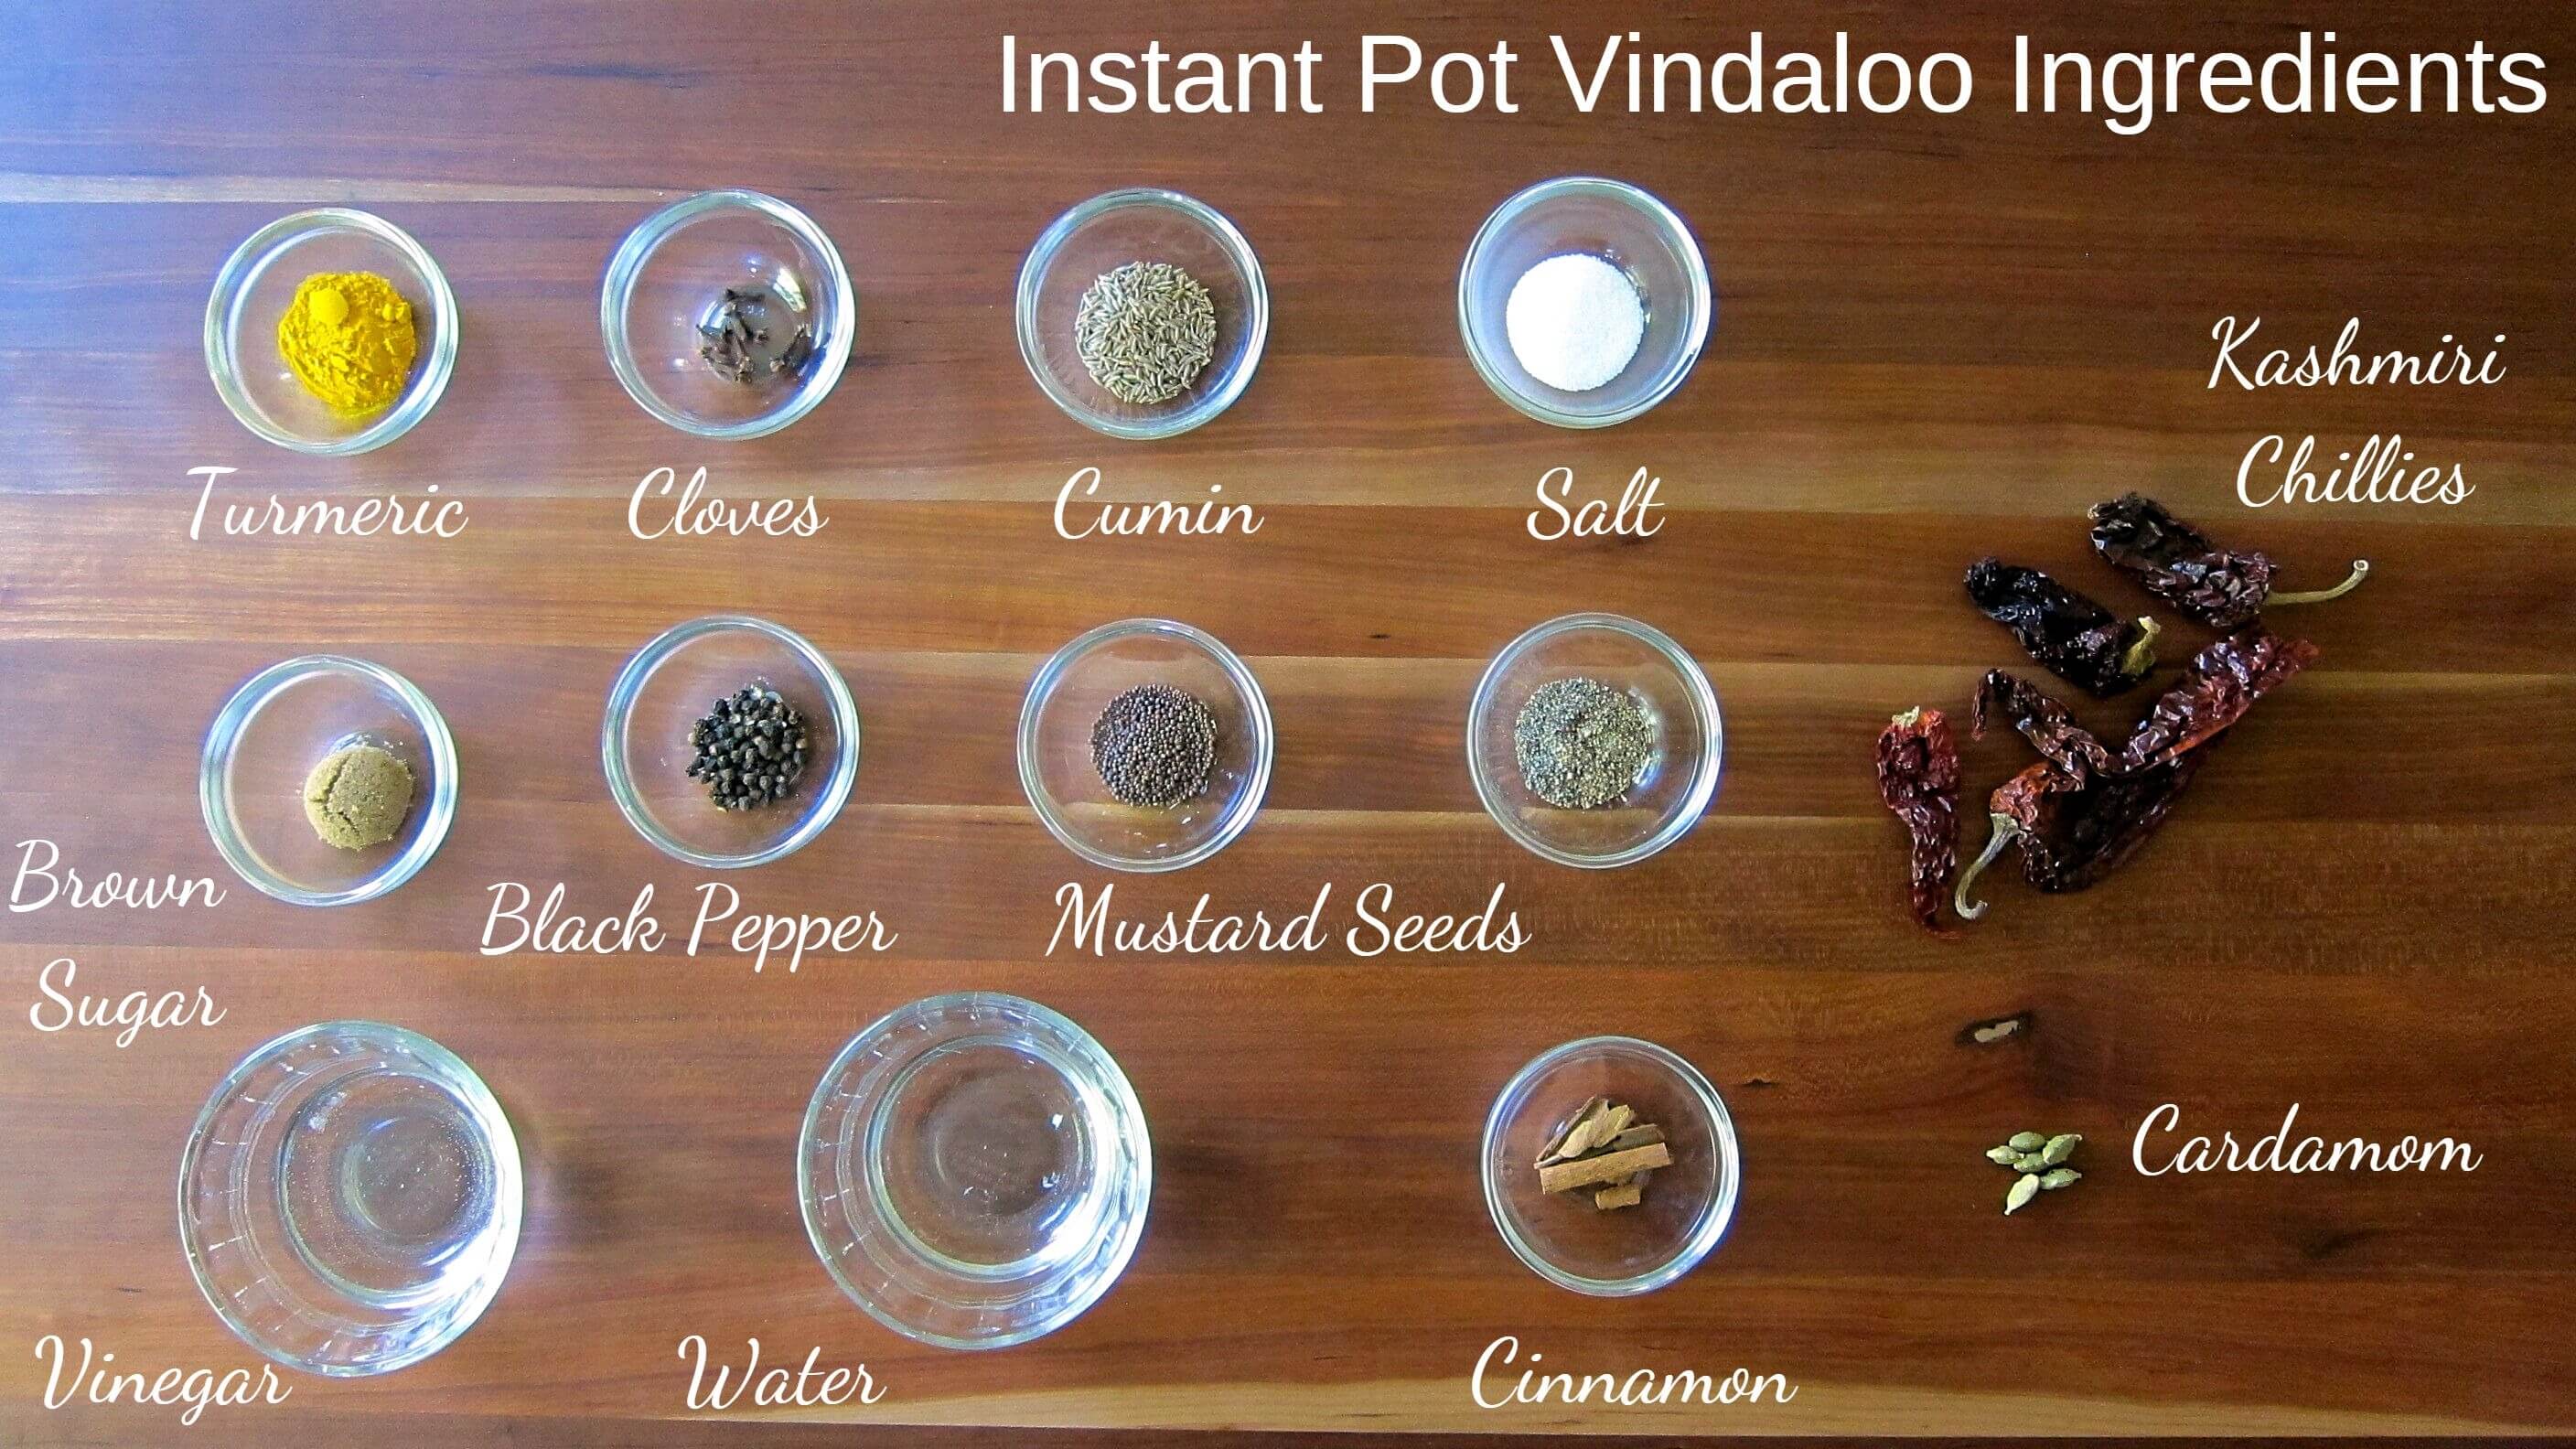 Instant Pot Vindaloo Ingredients  - turmeric, cloves, cumin, salt, Kashmiri chilis, brown sugar, black pepper, mustard seeds, vinegar, water, cinnamon, cardamom